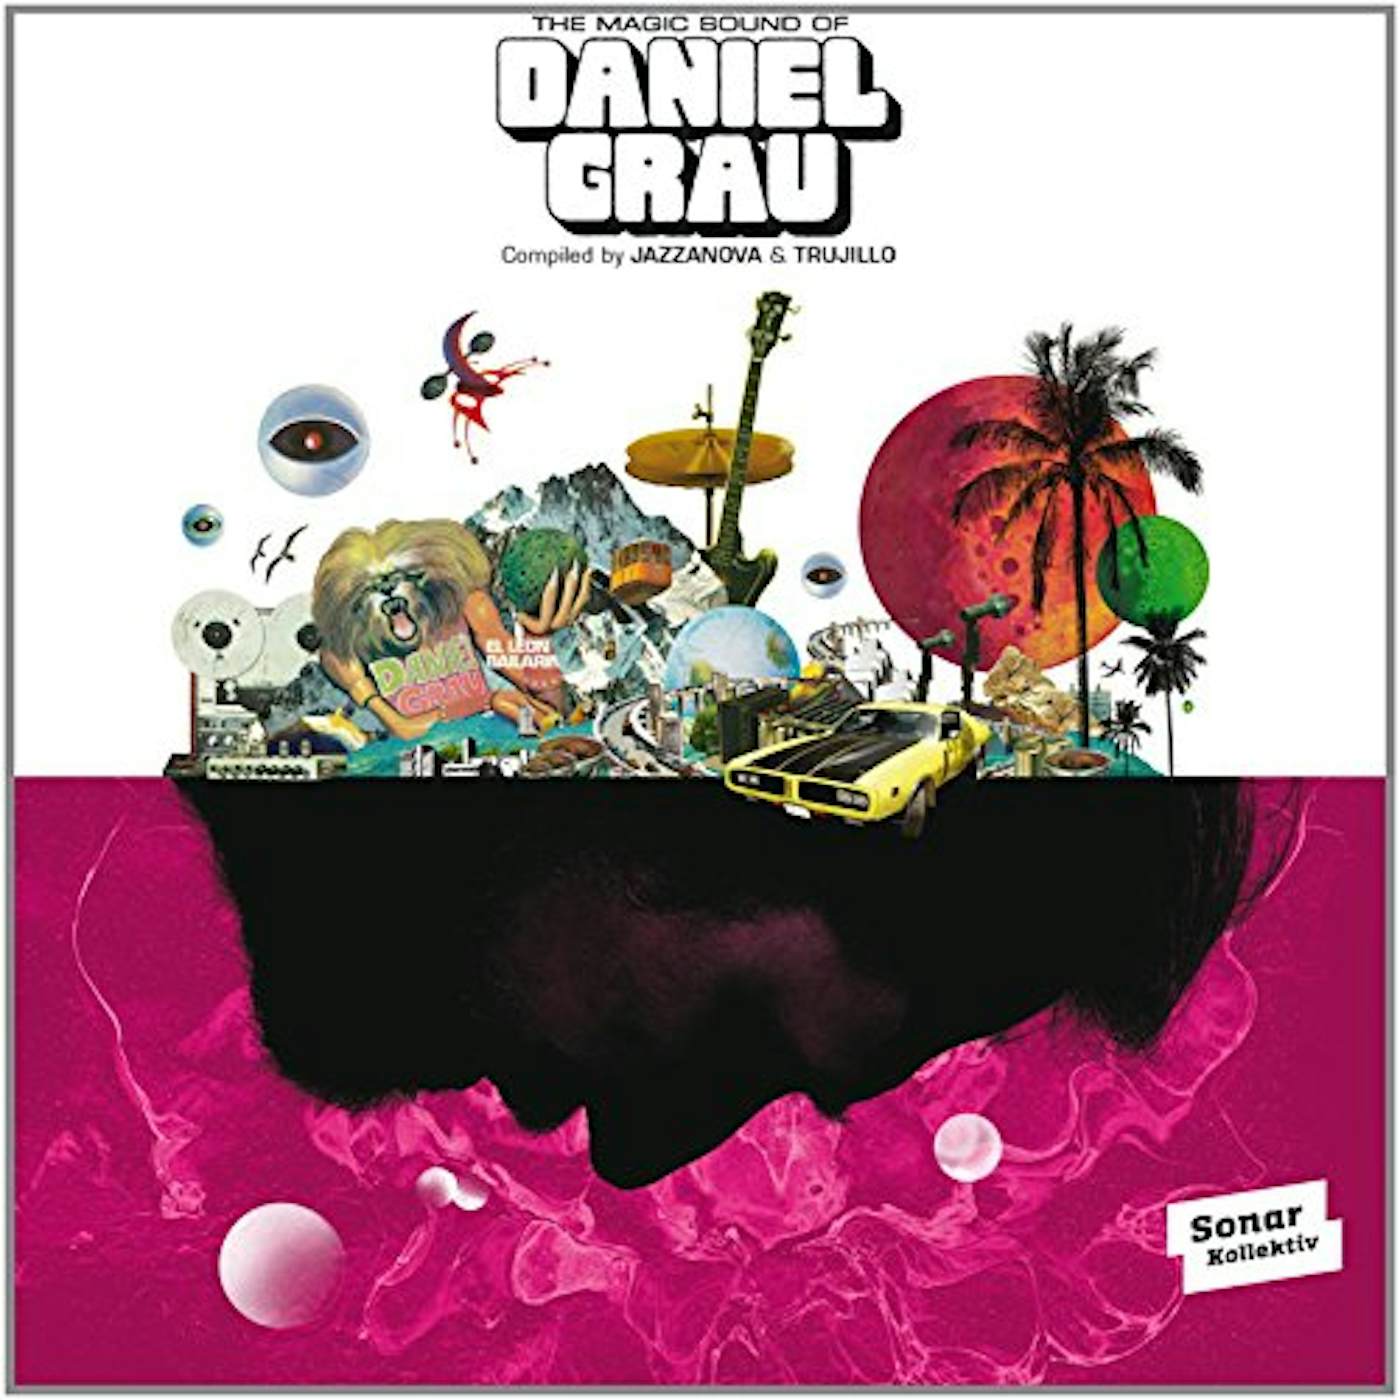 MAGIC SOUND OF DANIEL GRAU Vinyl Record - UK Release